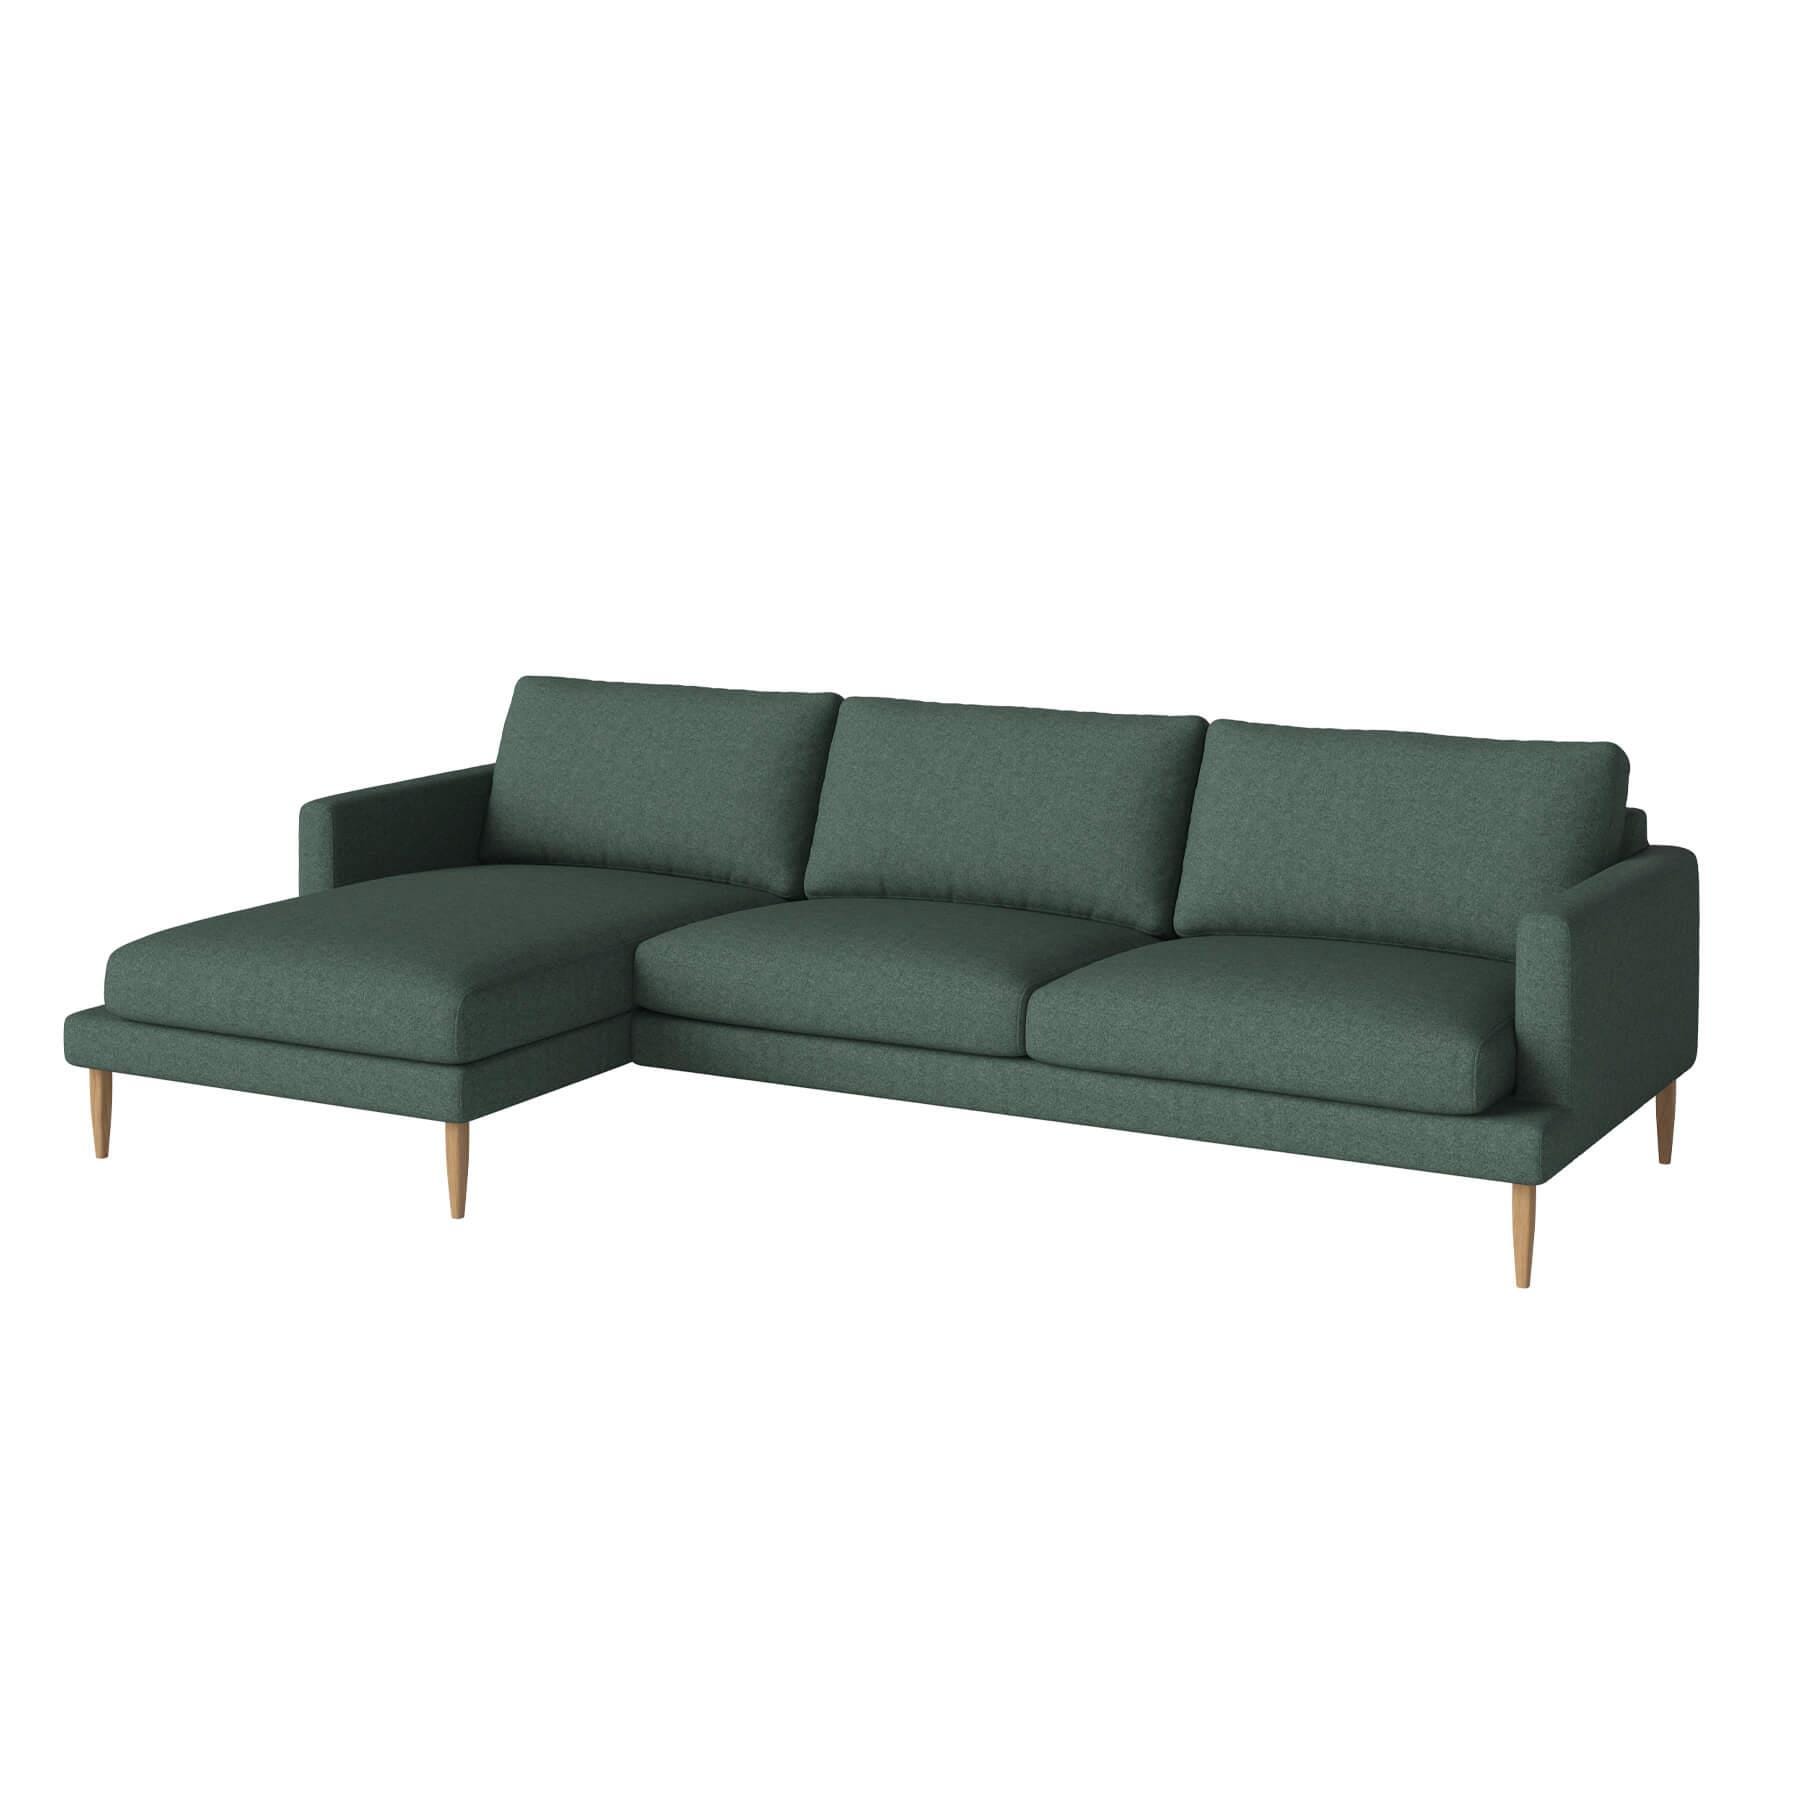 Bolia Veneda Sofa 35 Seater Sofa With Chaise Longue Oiled Oak Qual Sea Green Left Green Designer Furniture From Holloways Of Ludlow